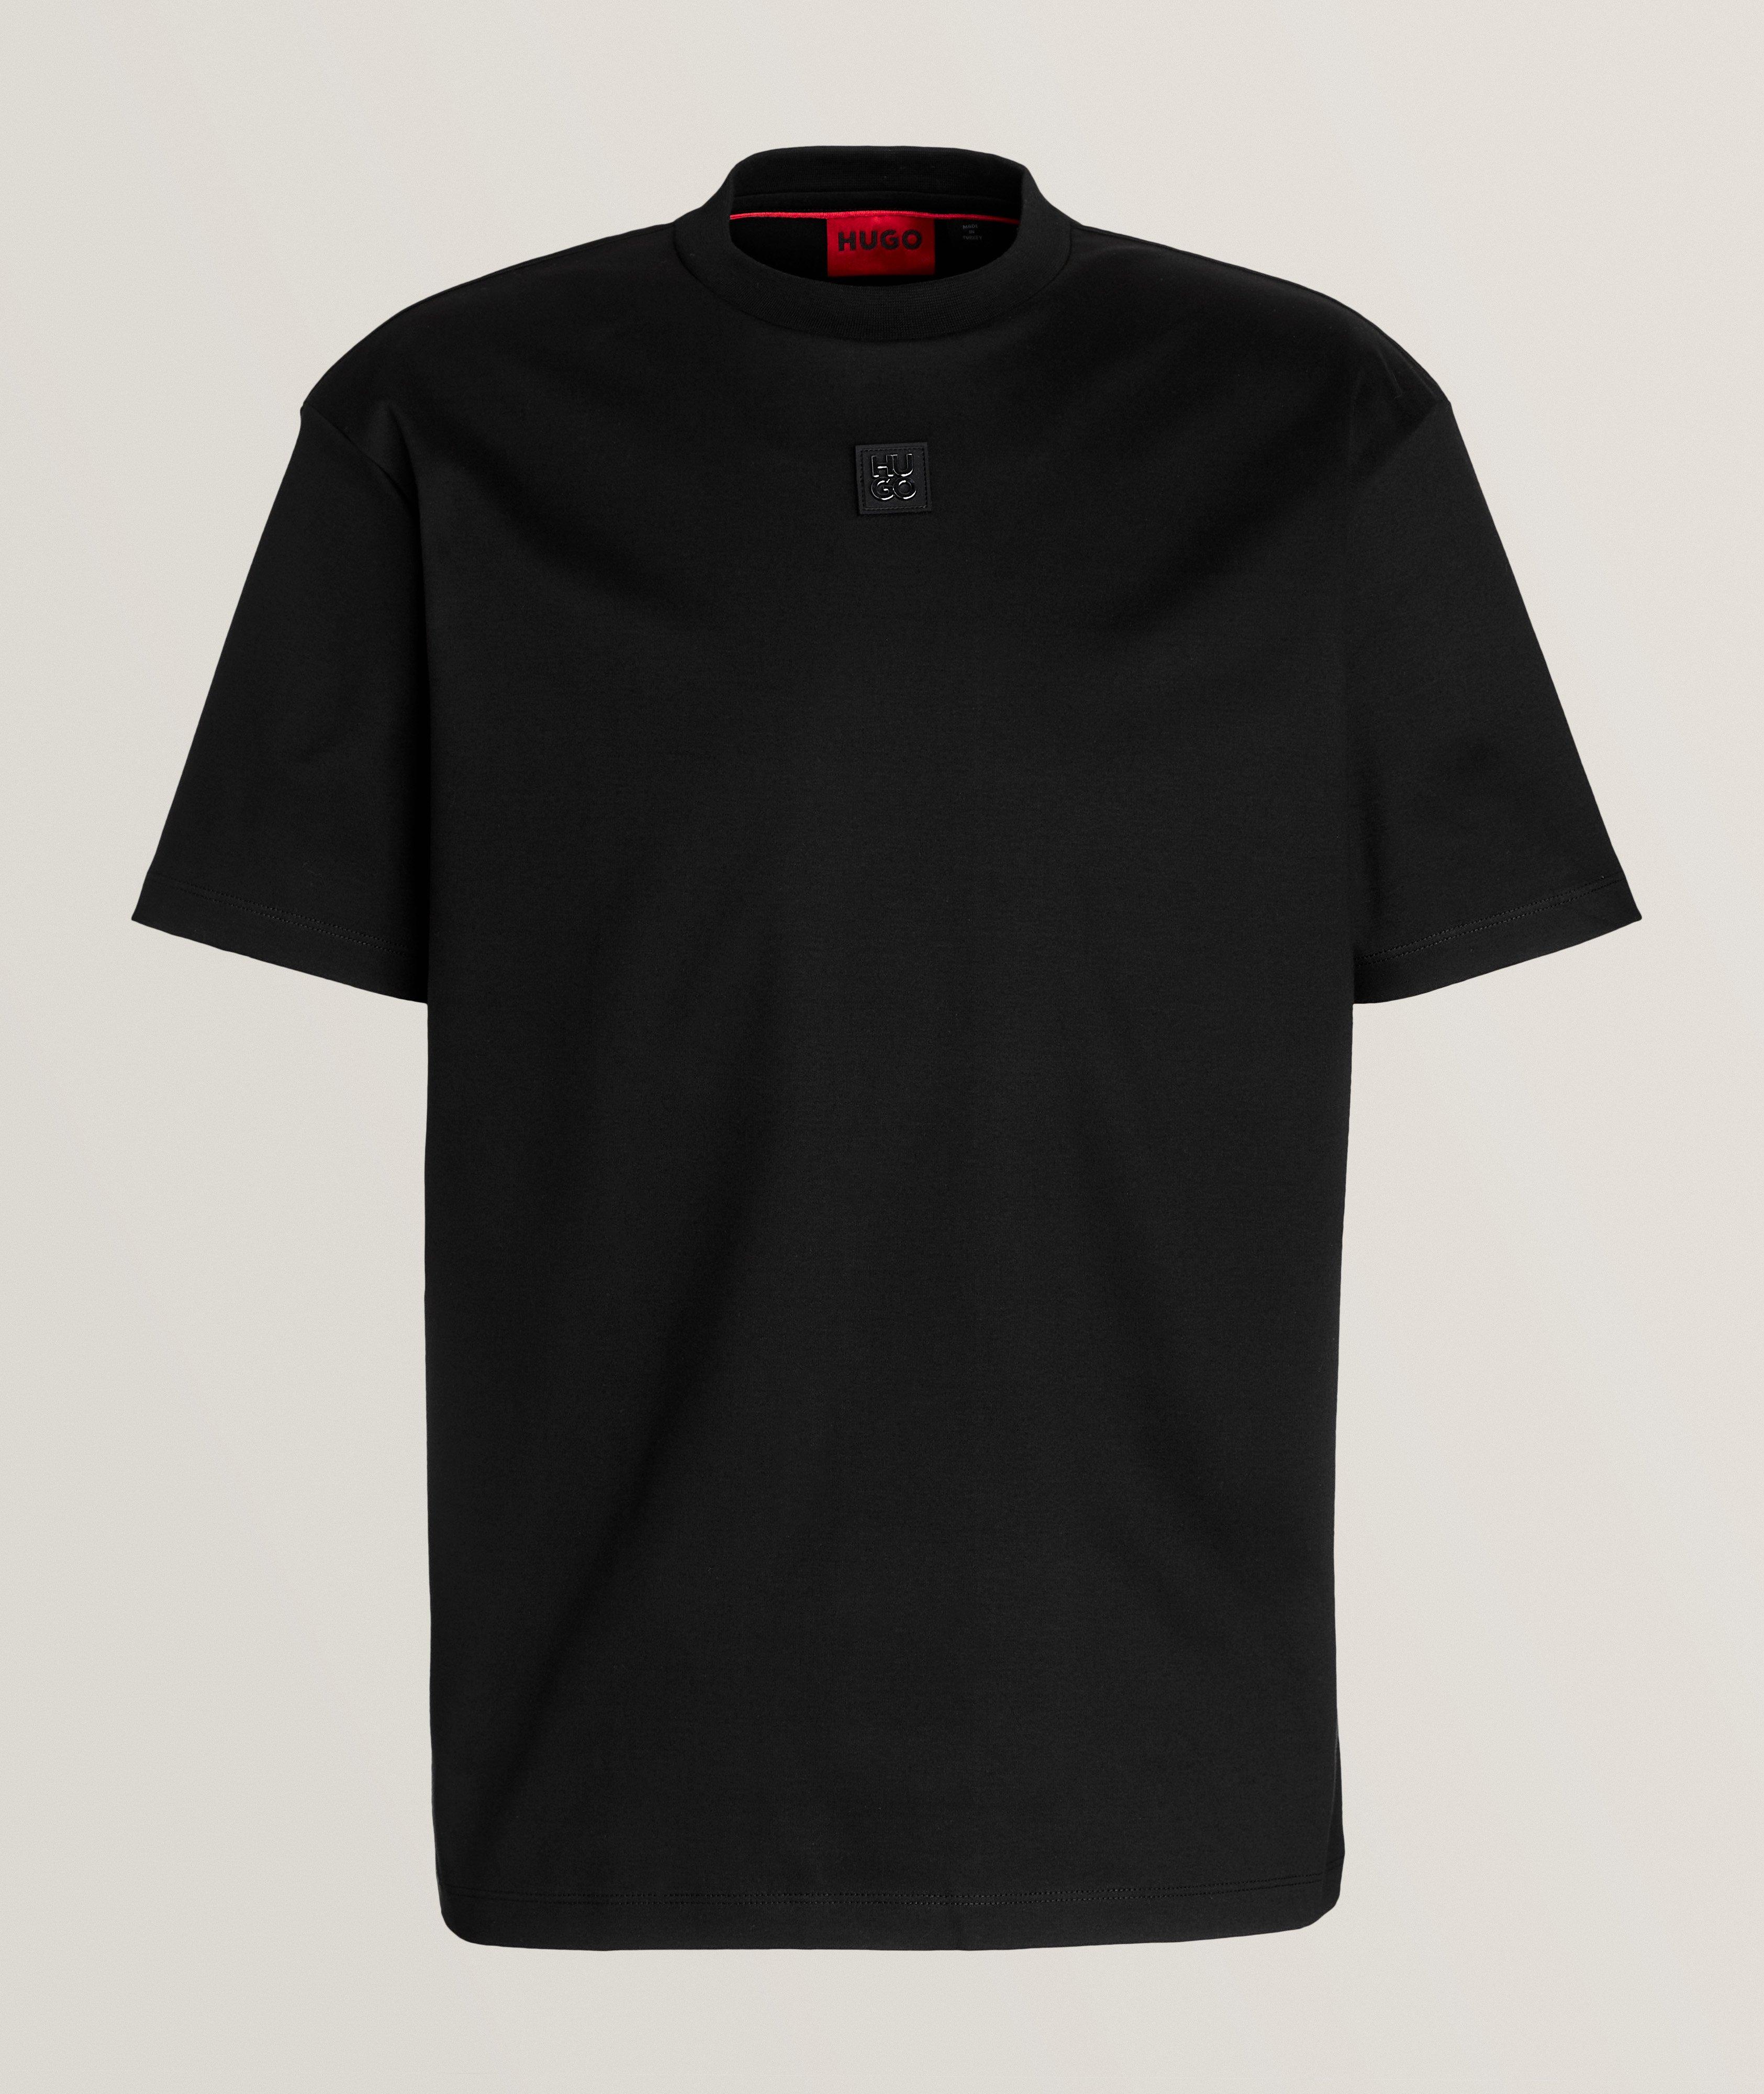 T-shirt en tricot interlock avec logo image 0